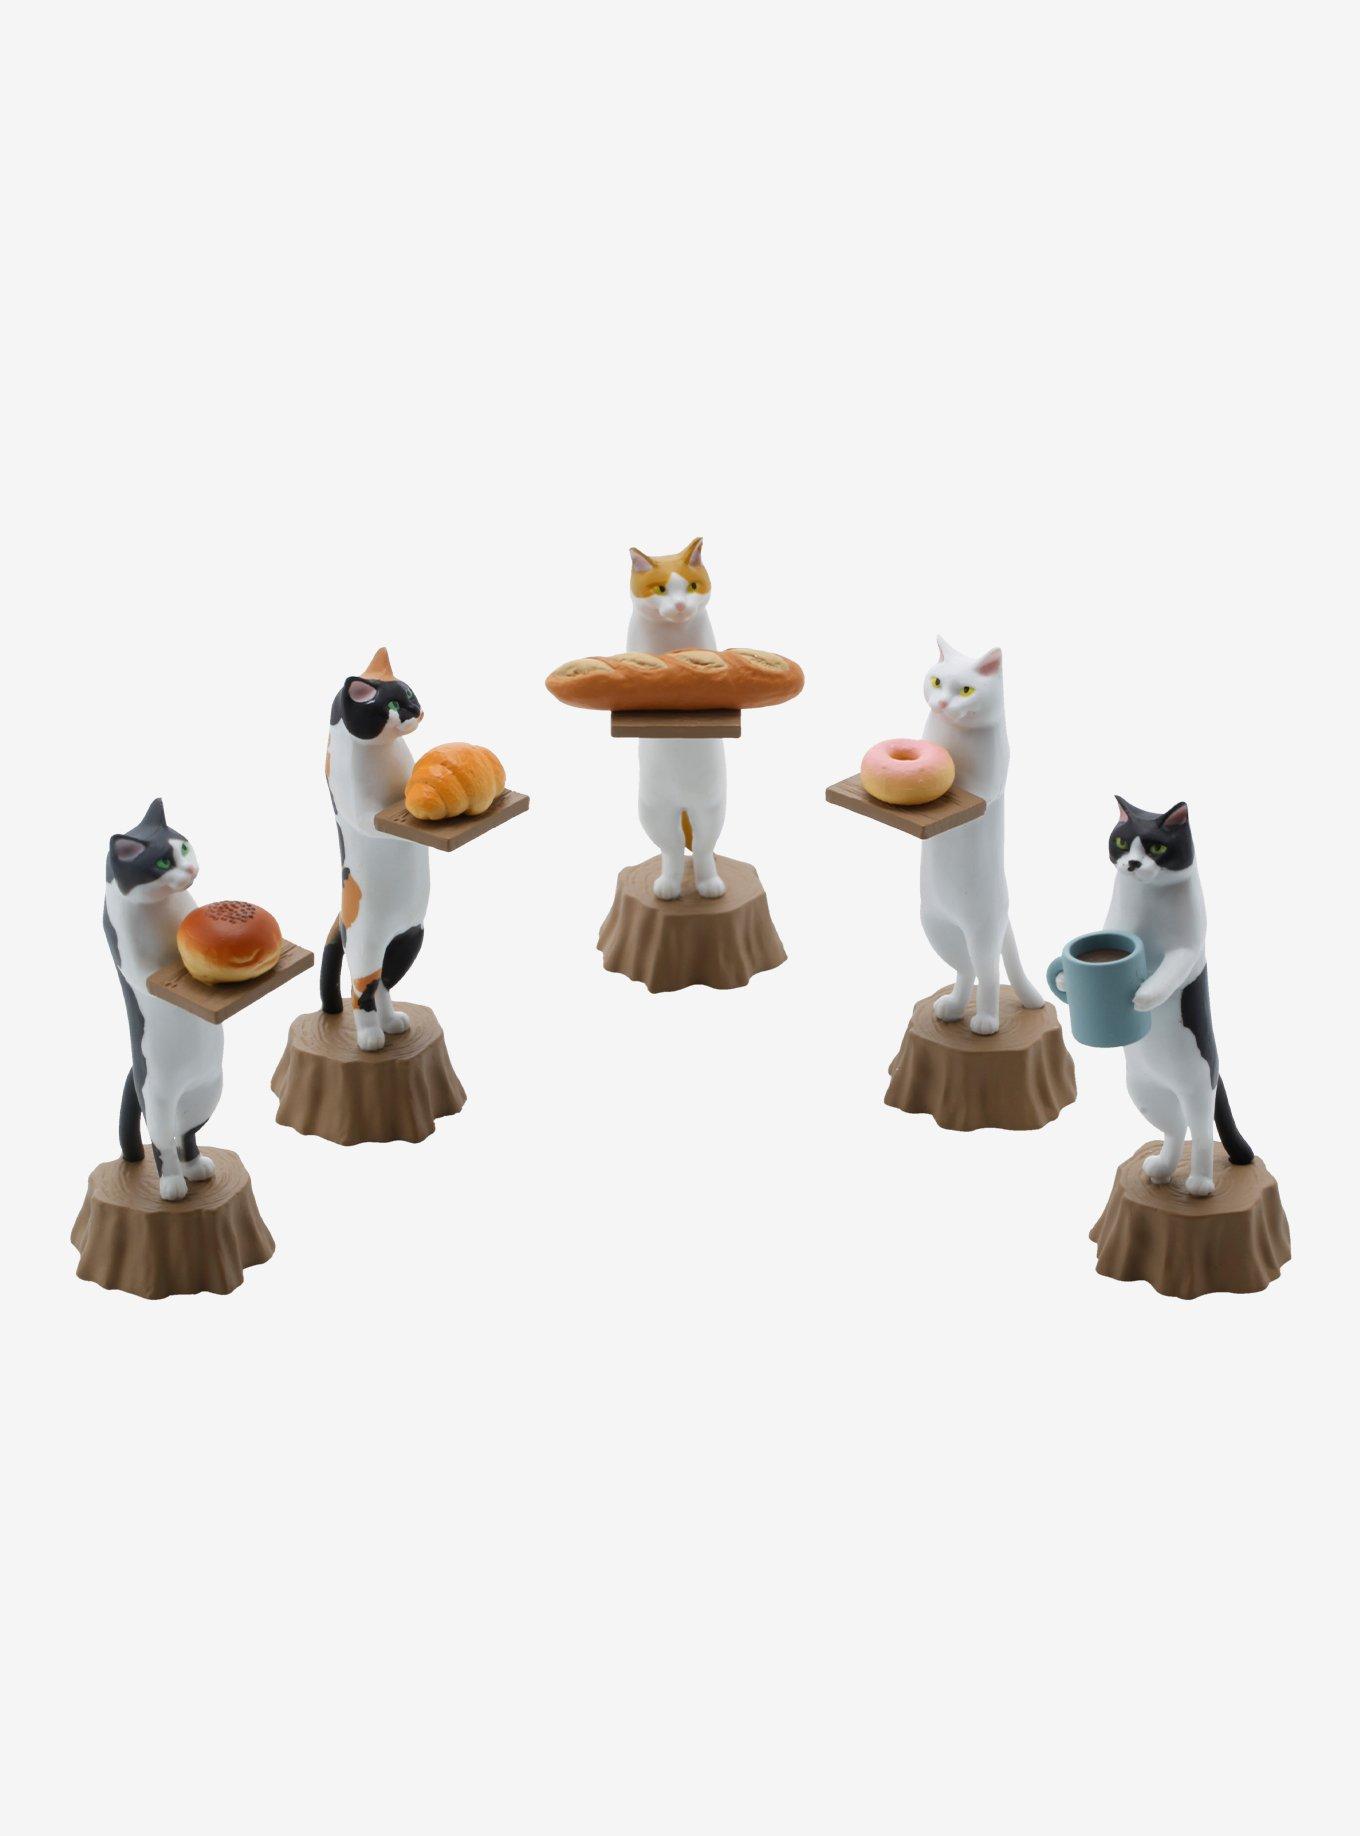 Mystery Box Toy - Cat Bakery - KoboSeattle